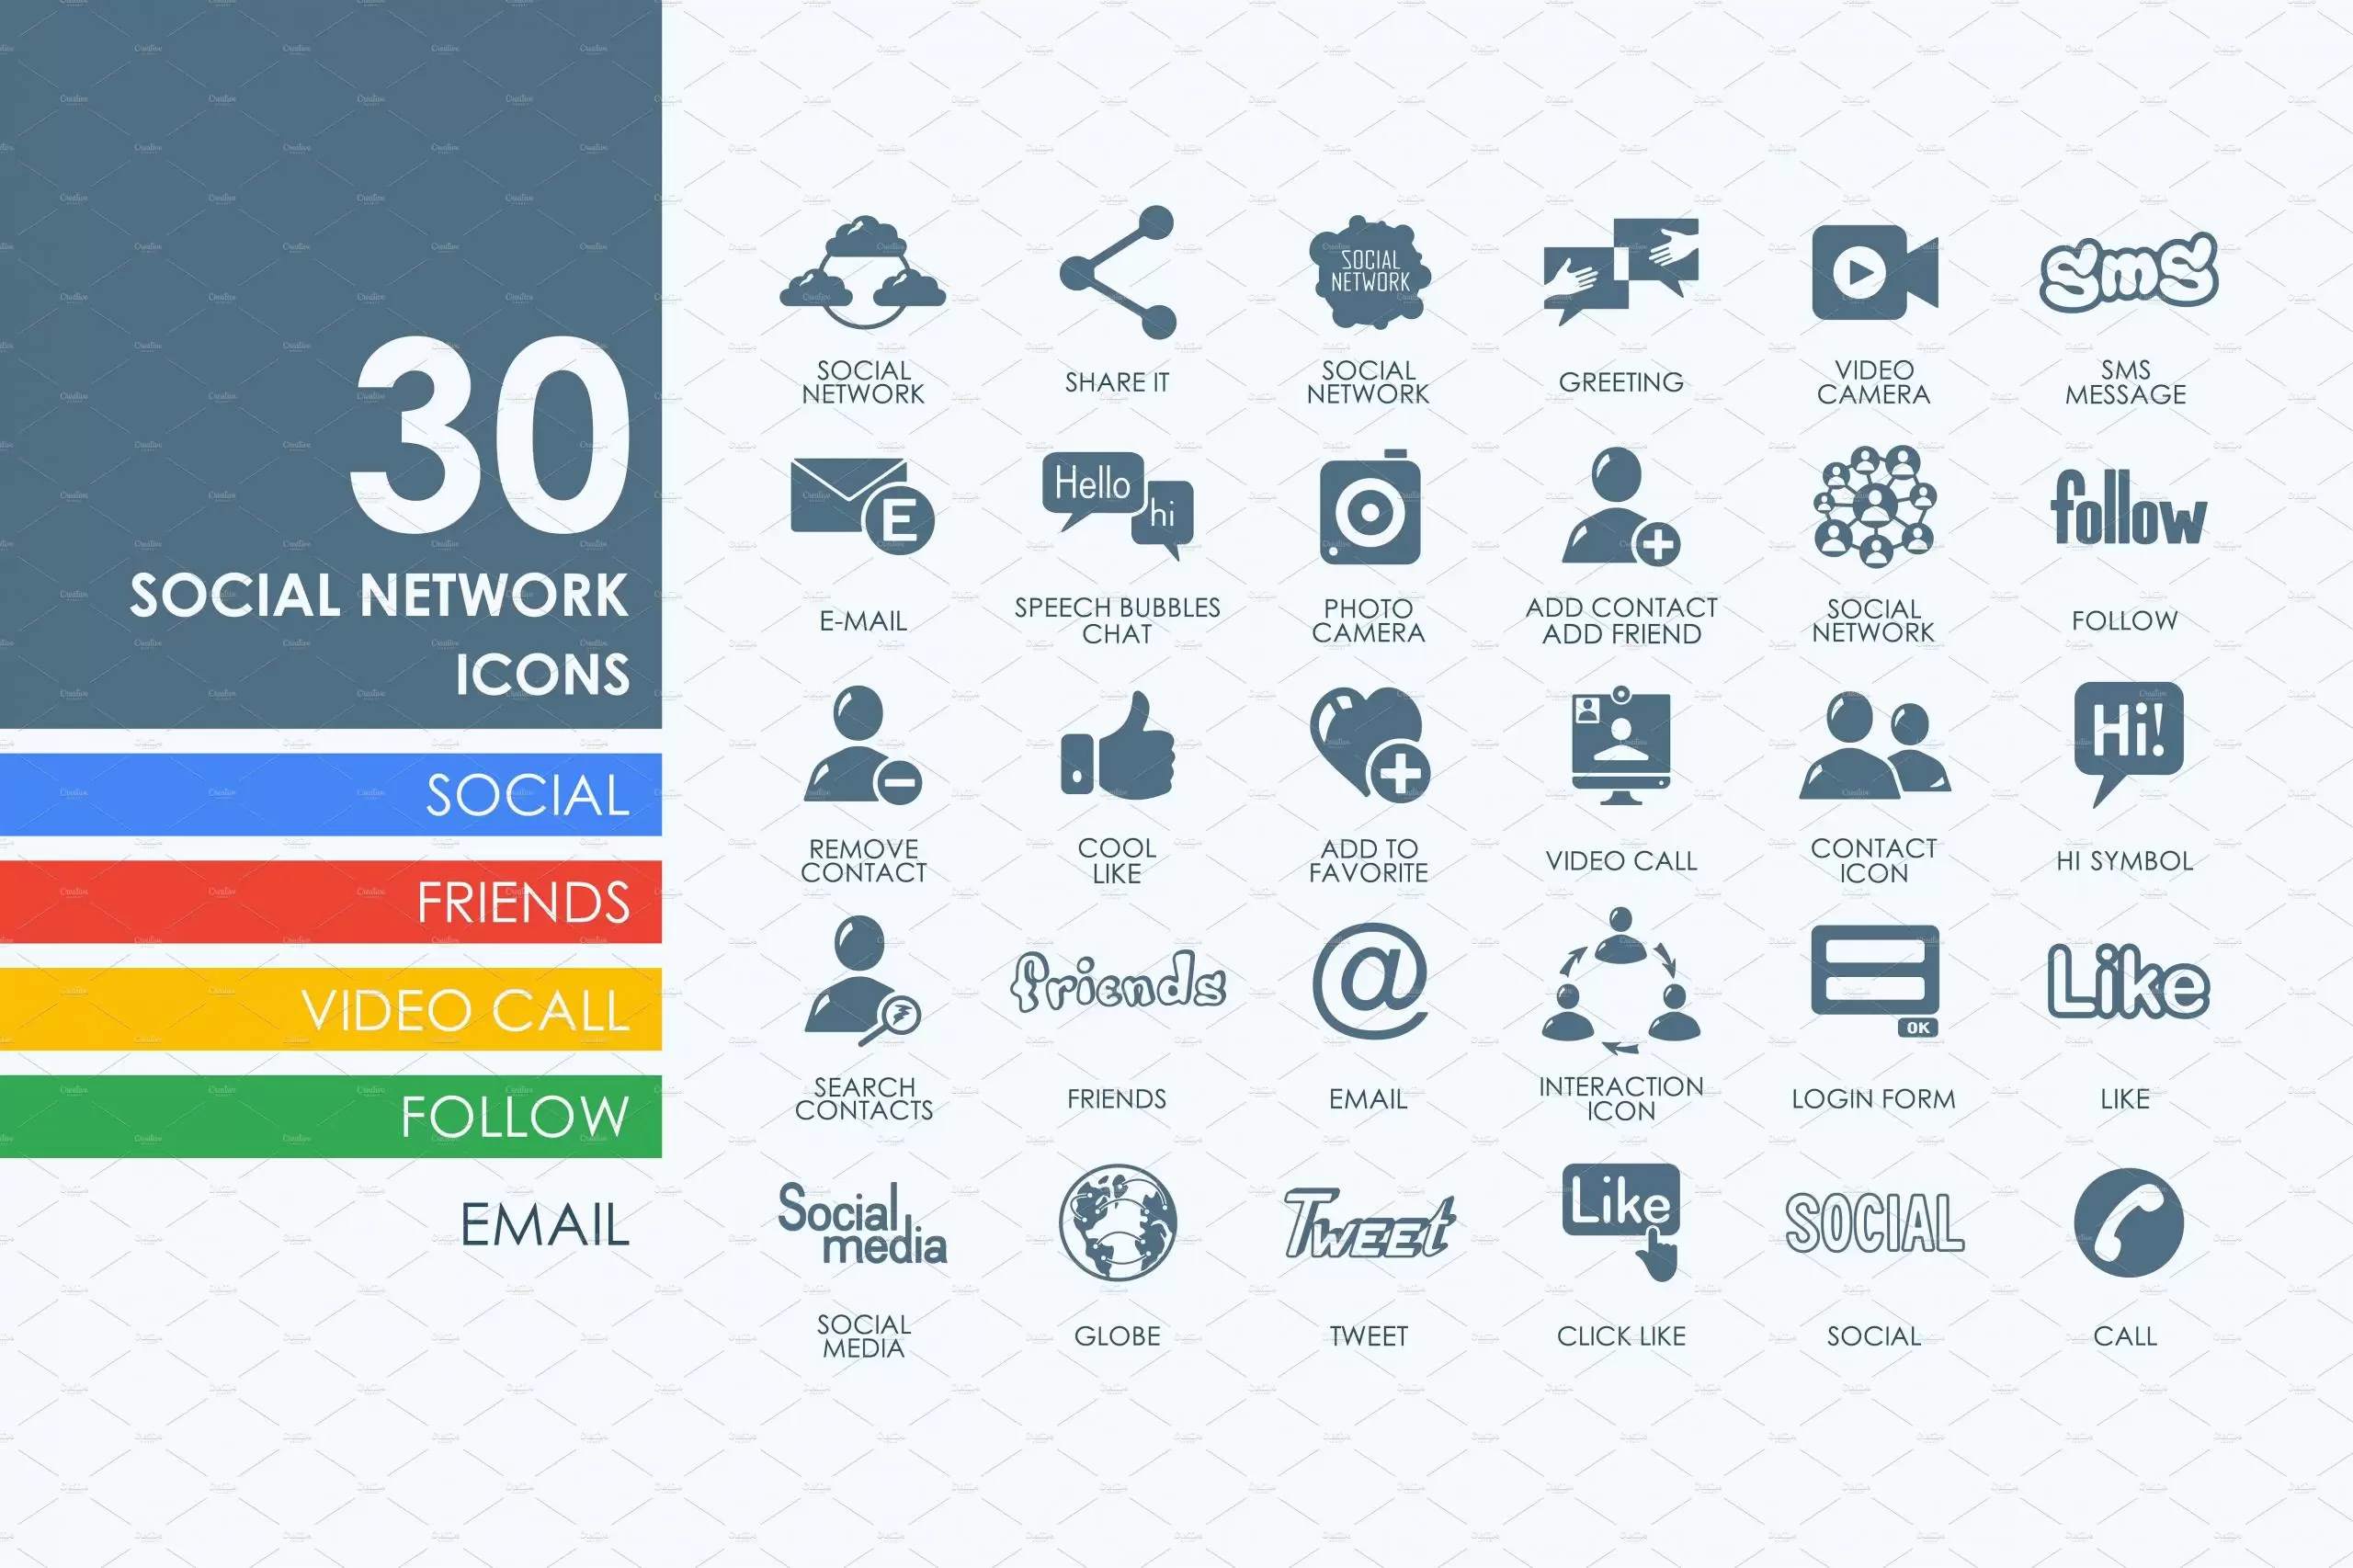 社交网络图标素材 30 social network icons插图